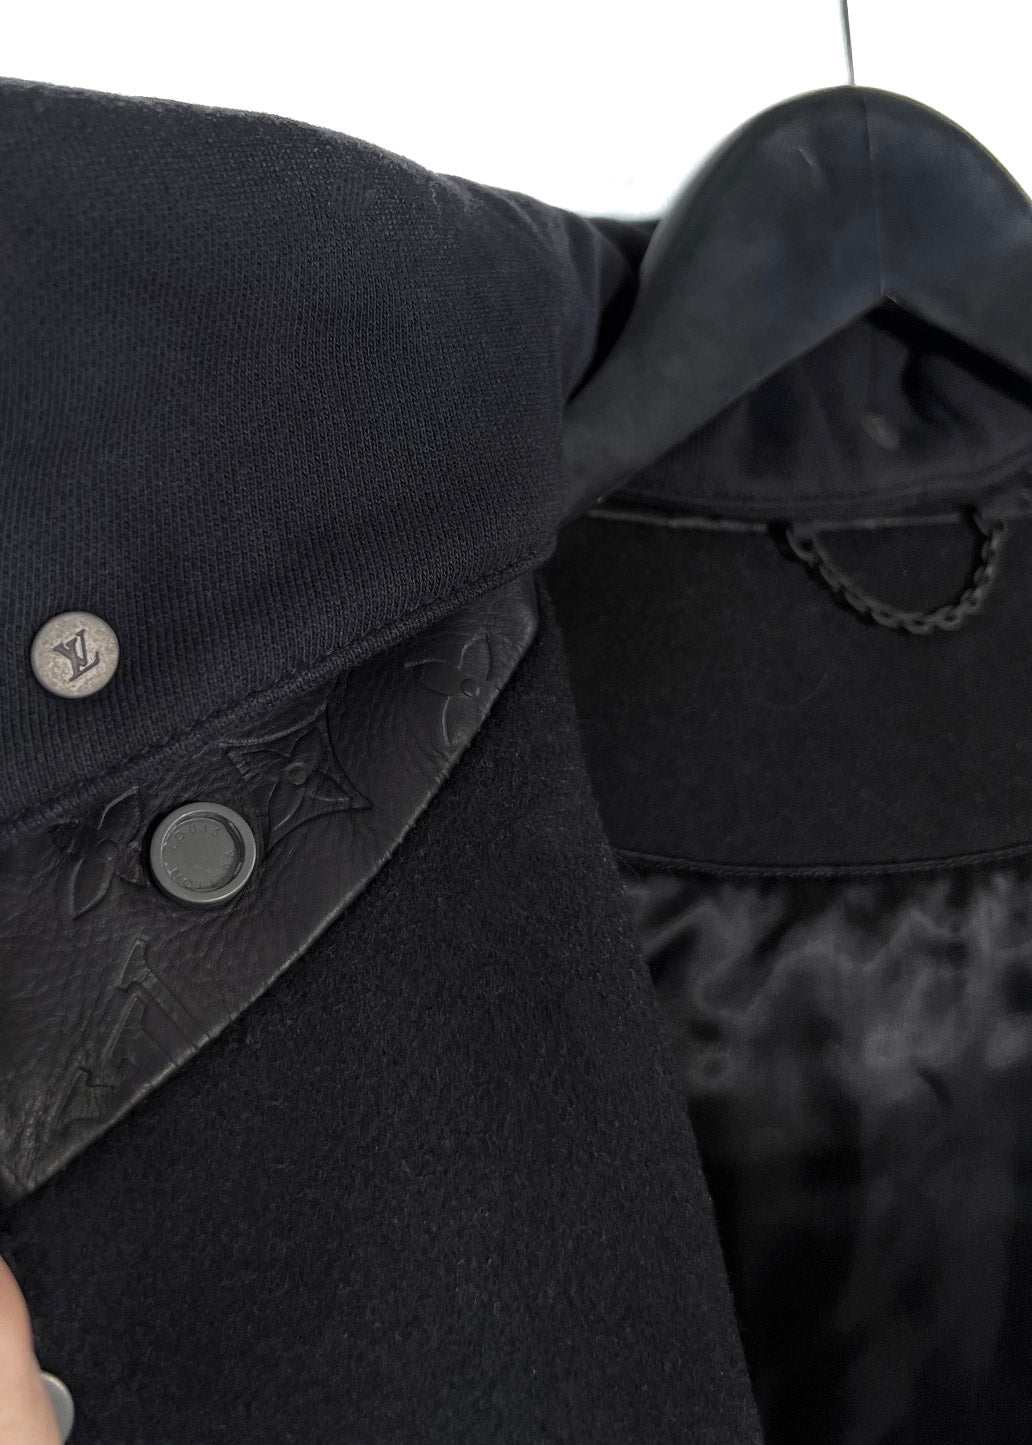 Shop Louis Vuitton 2021-22FW Varsity leather jacket by BrandStreetStore